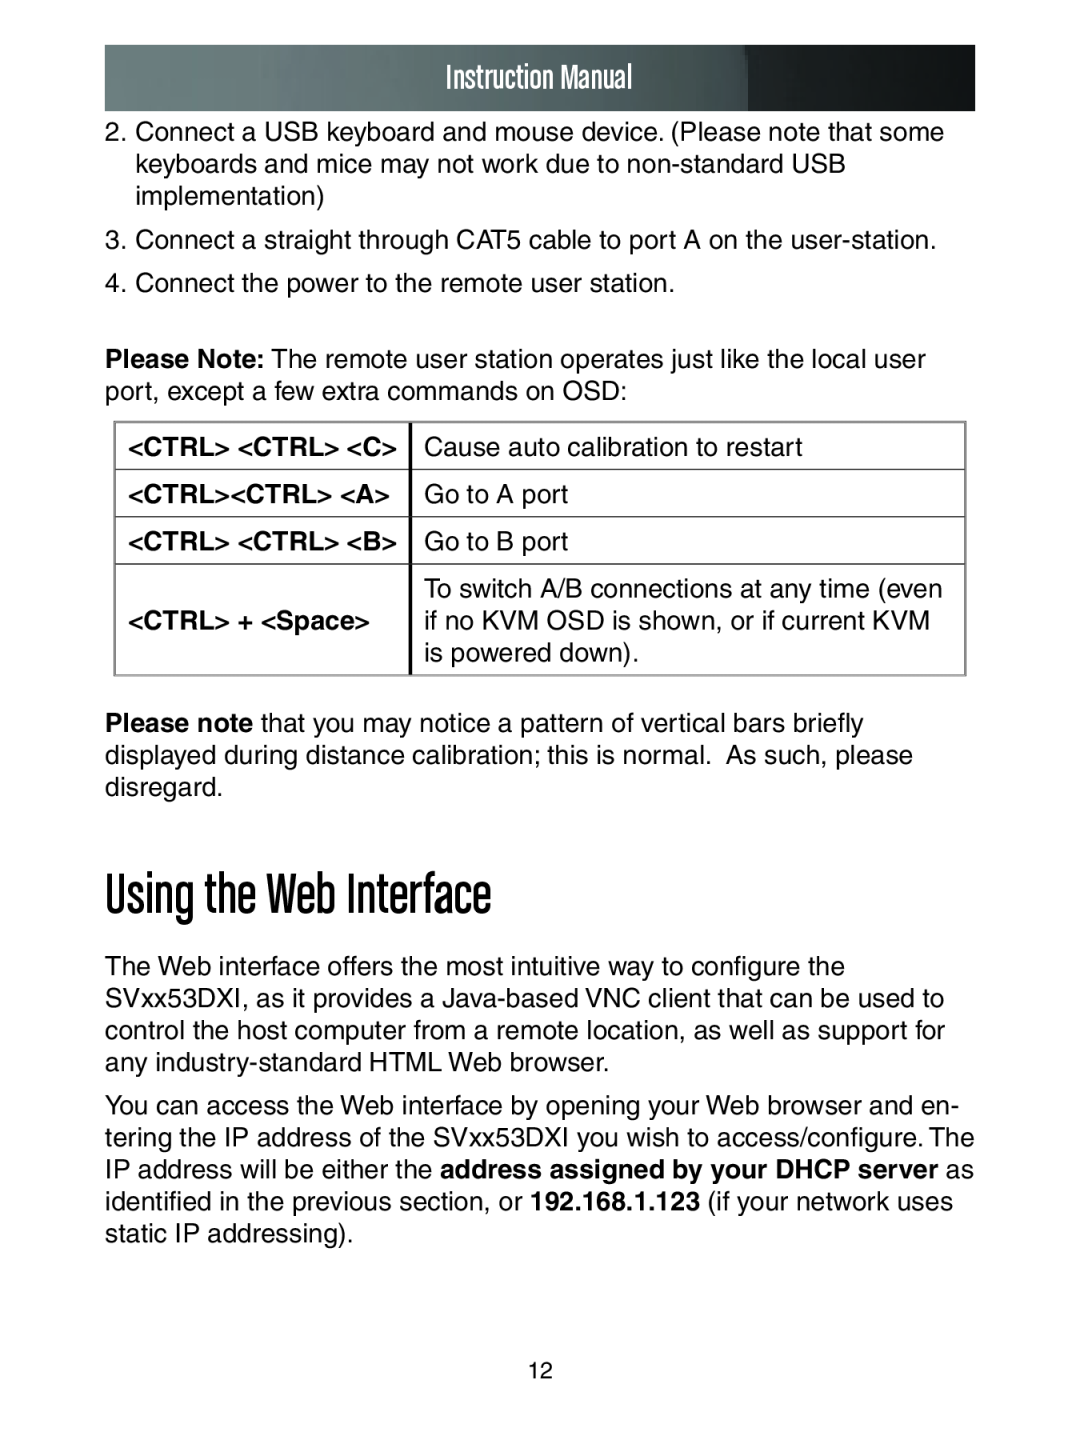 StarTech.com SV3253DXI Using the Web Interface, Ctrl Ctrl C, Ctrlctrl A, Ctrl Ctrl B, CTRL + Space, Instruction Manual 